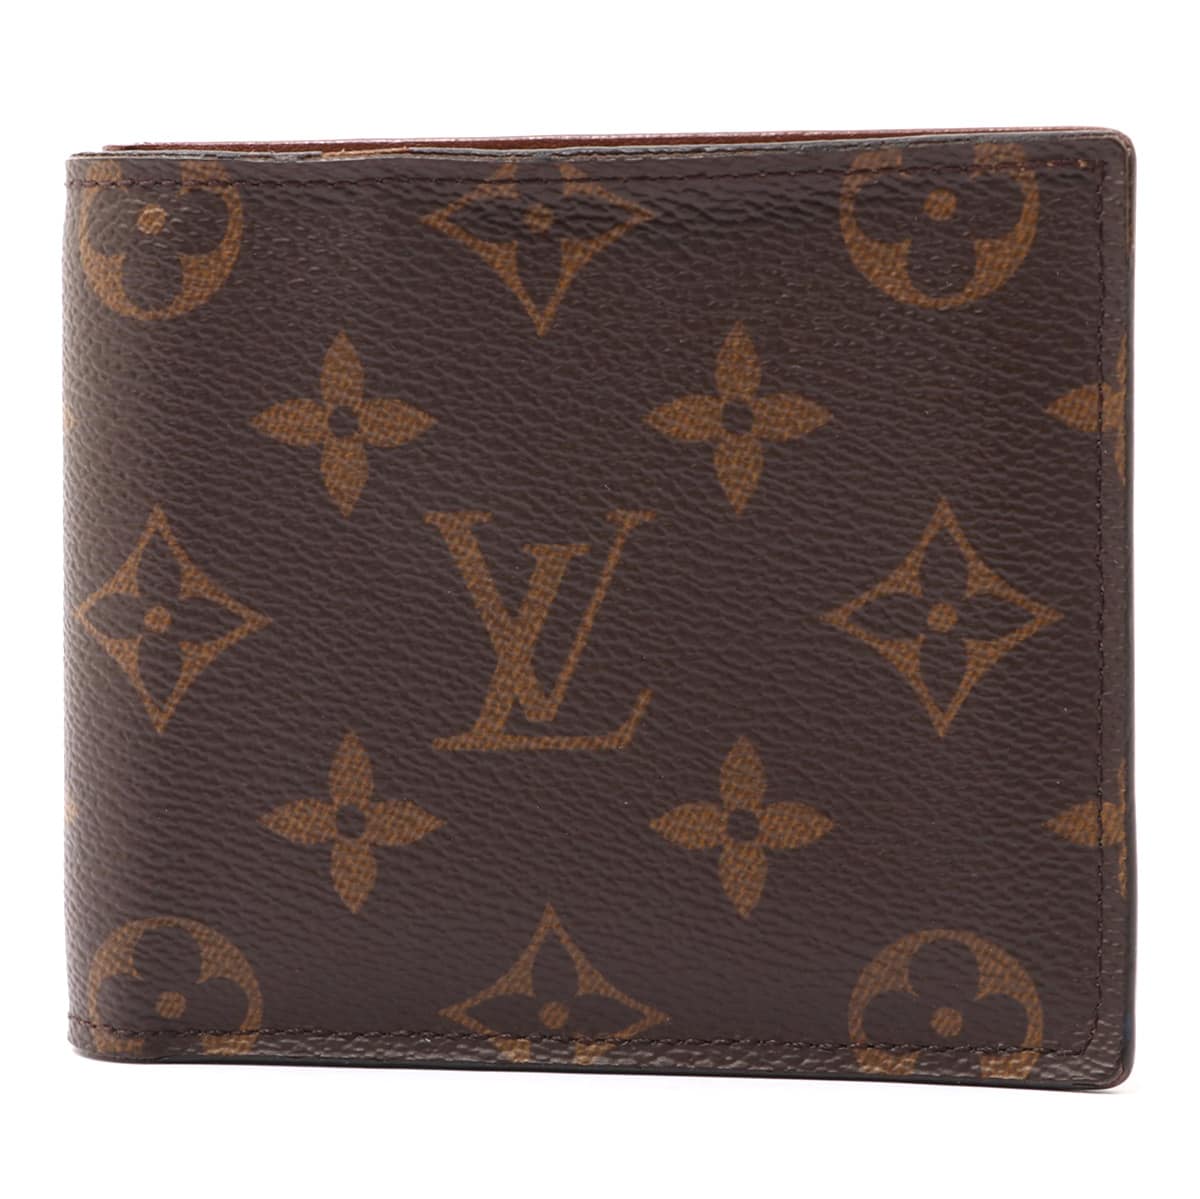 Louis Vuitton Monogram idylle Portefeuille Marco M62288